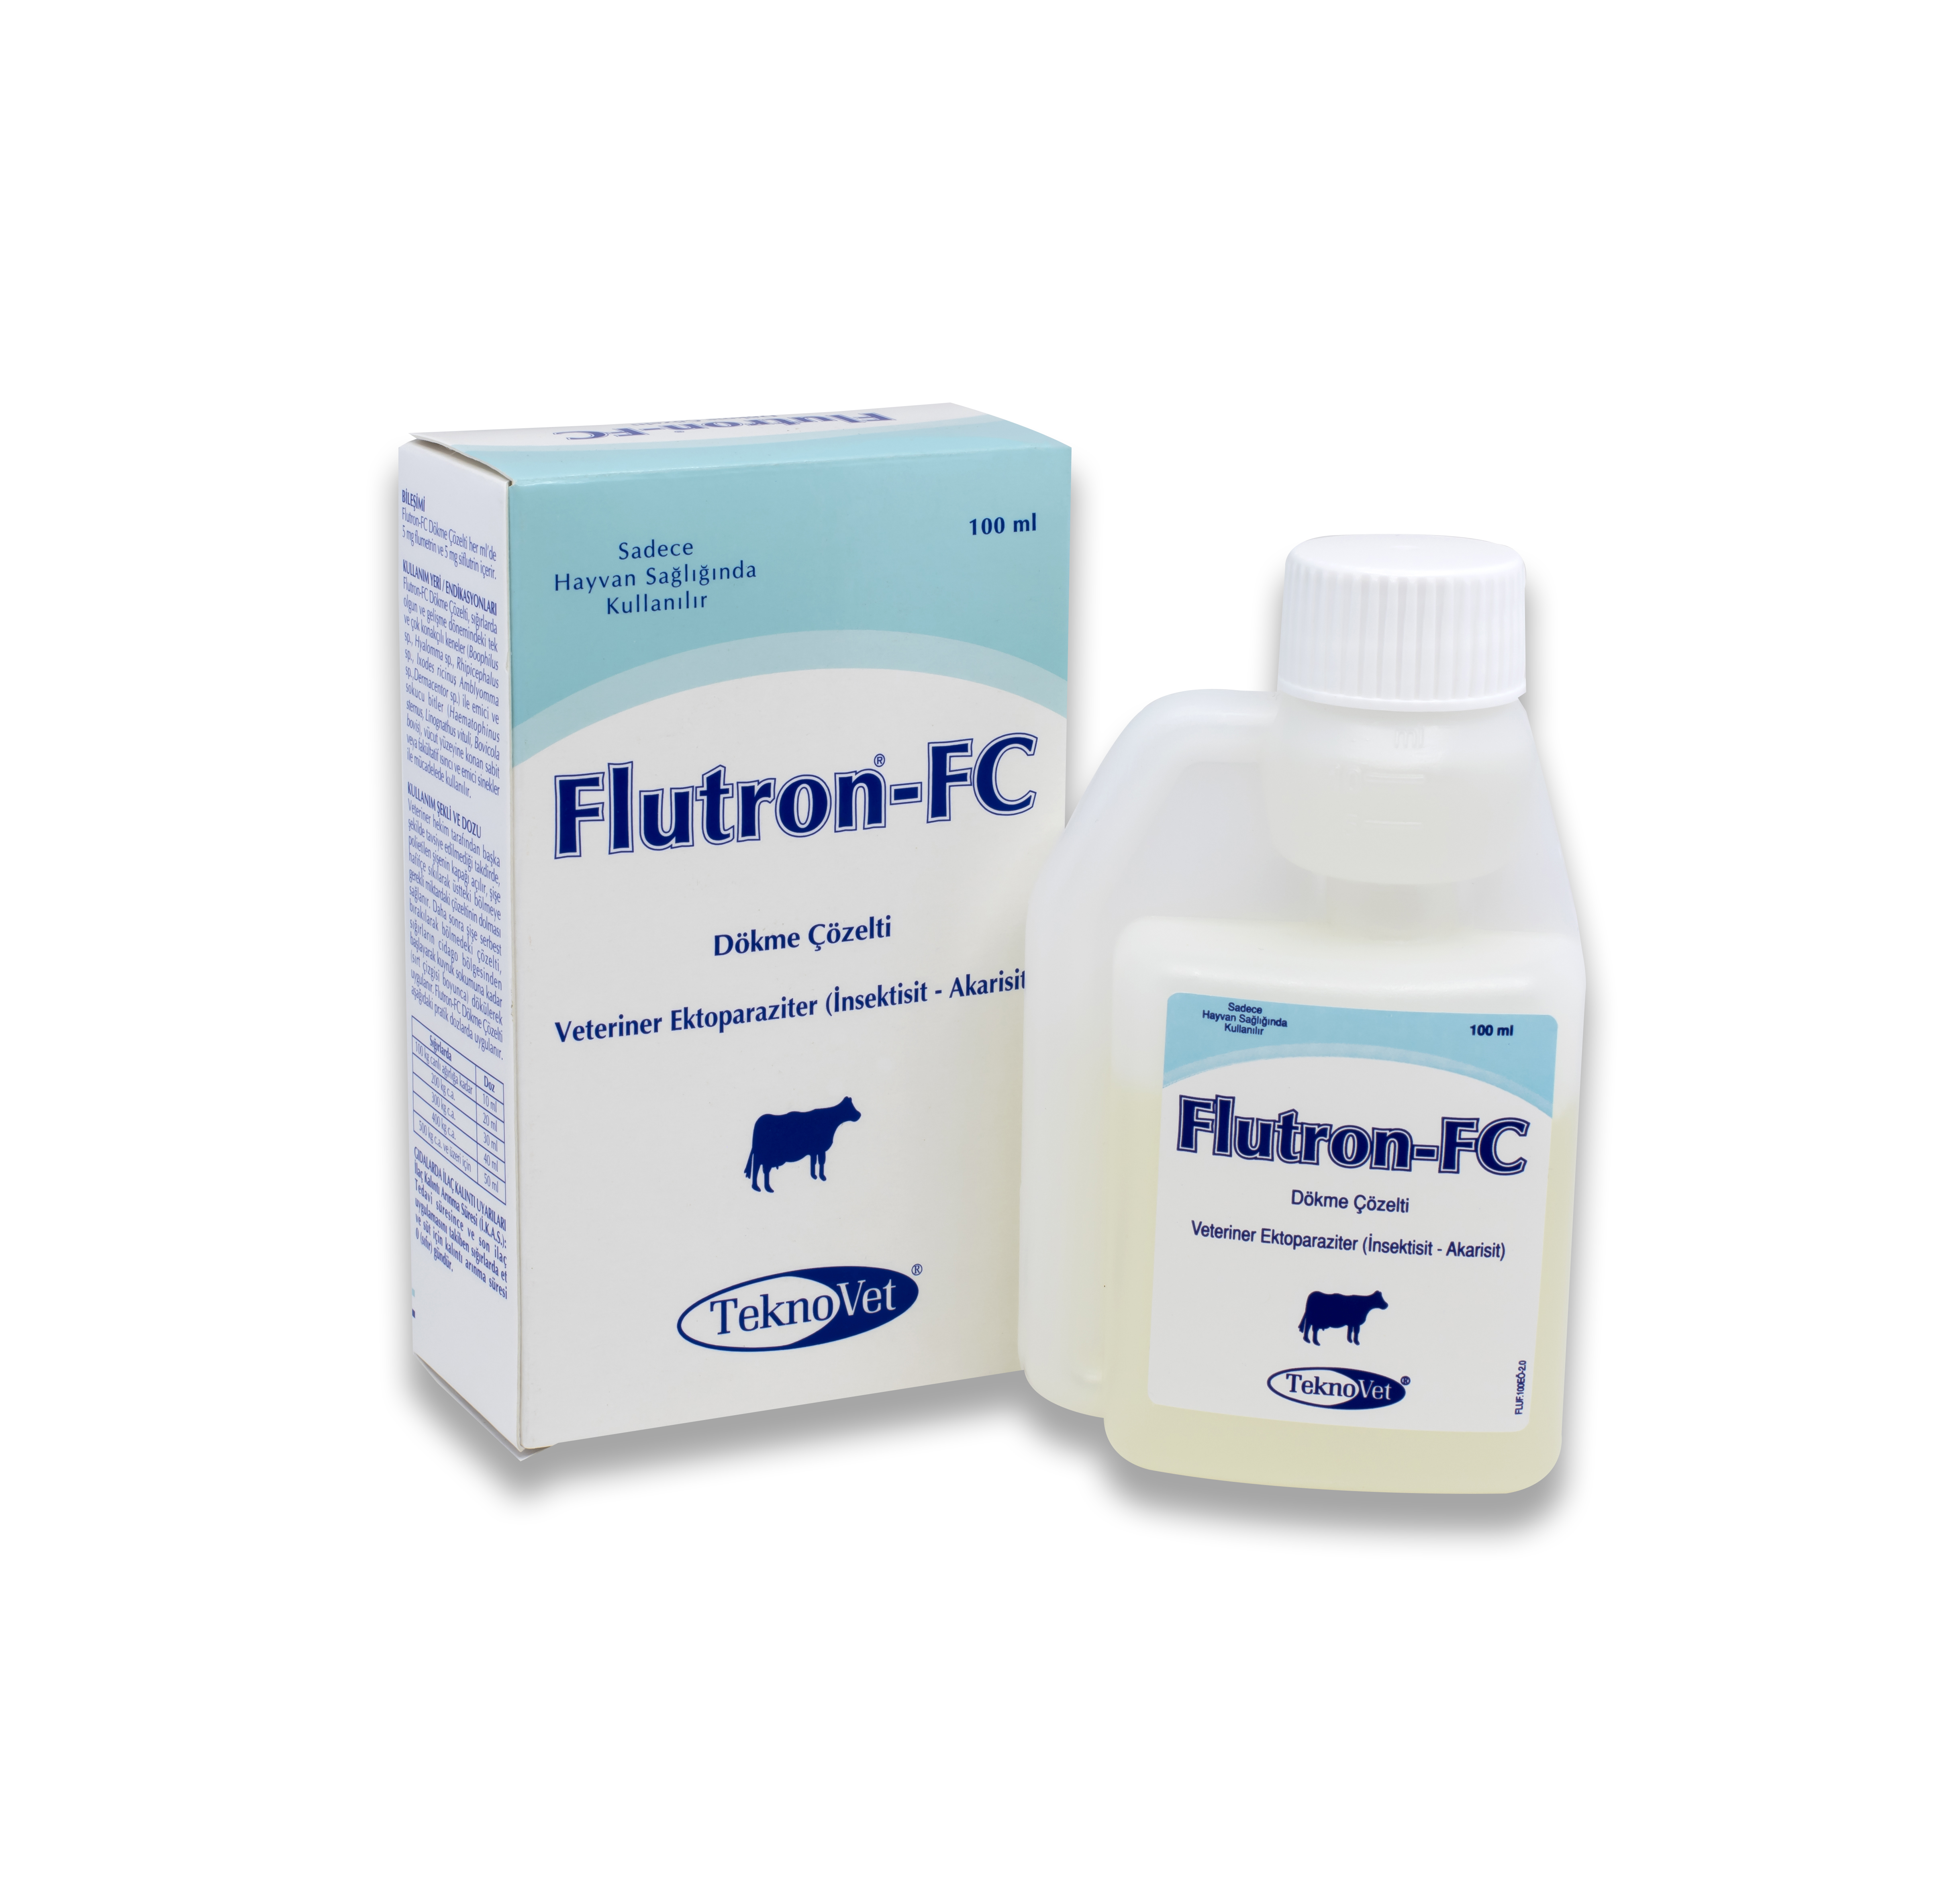 Flutron-FC